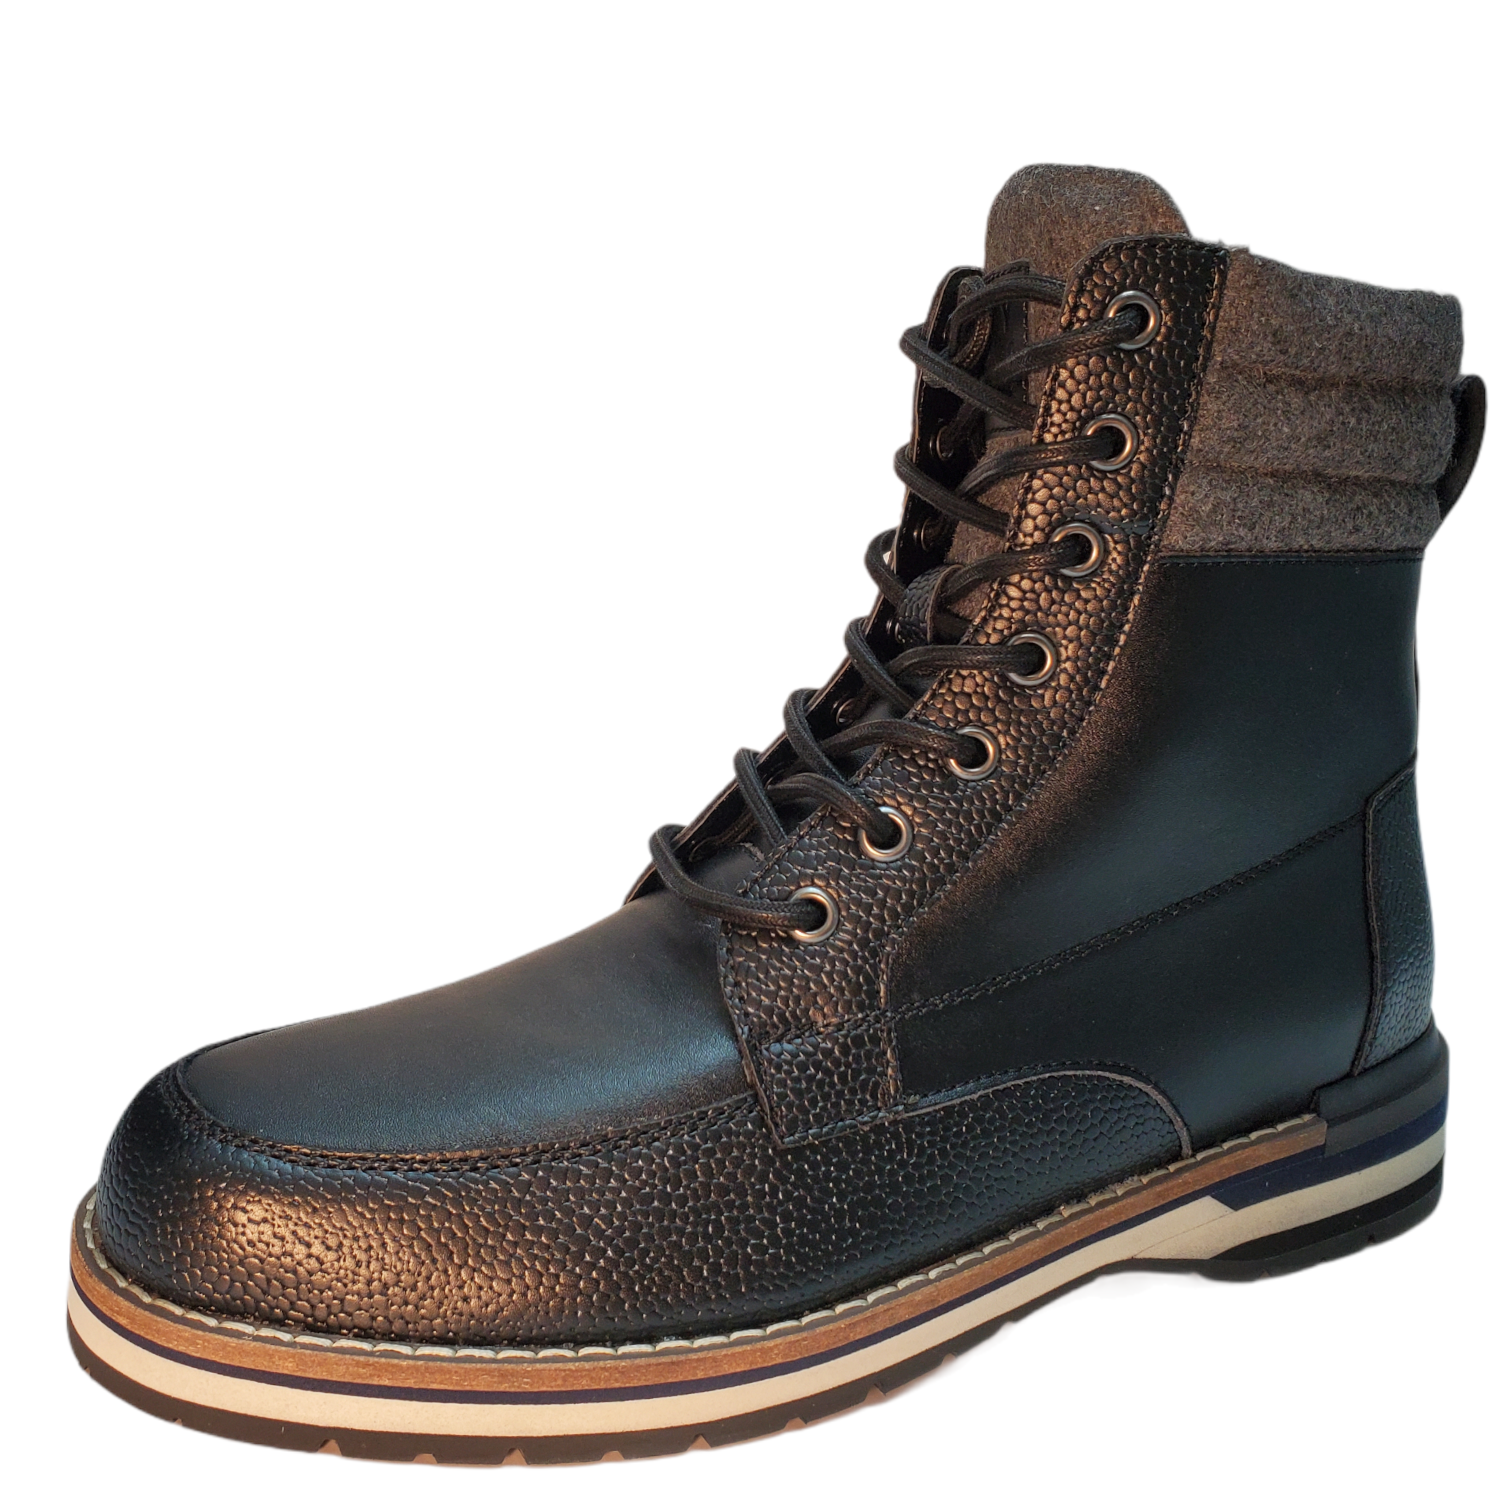 DKNY Mens Winston Jack Leather Boots Leather Black 8M US 7 UK